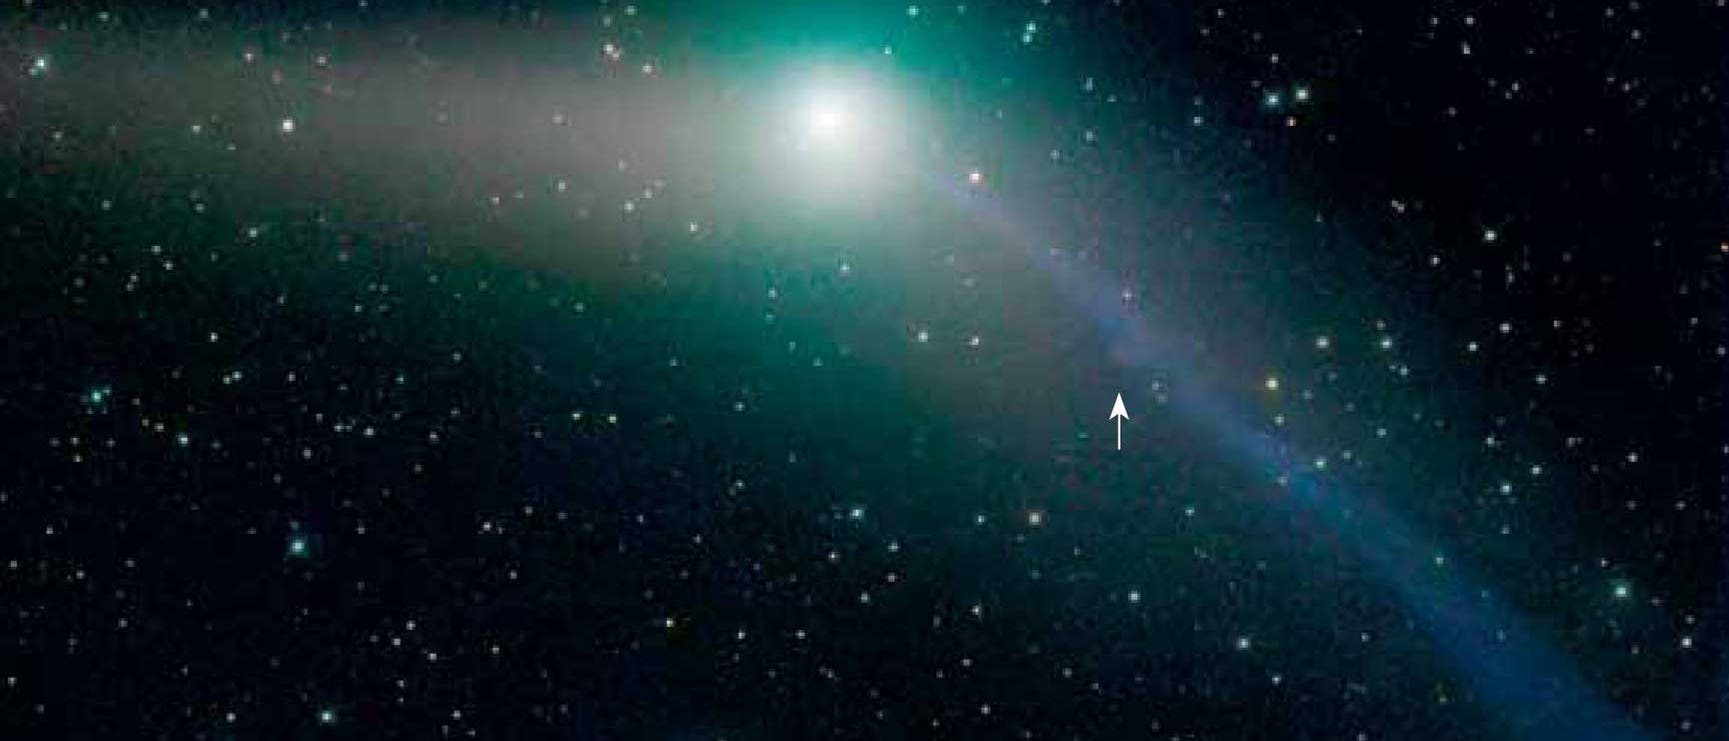 Komet C/2009 P1 Garradd am 27. Februar 2012